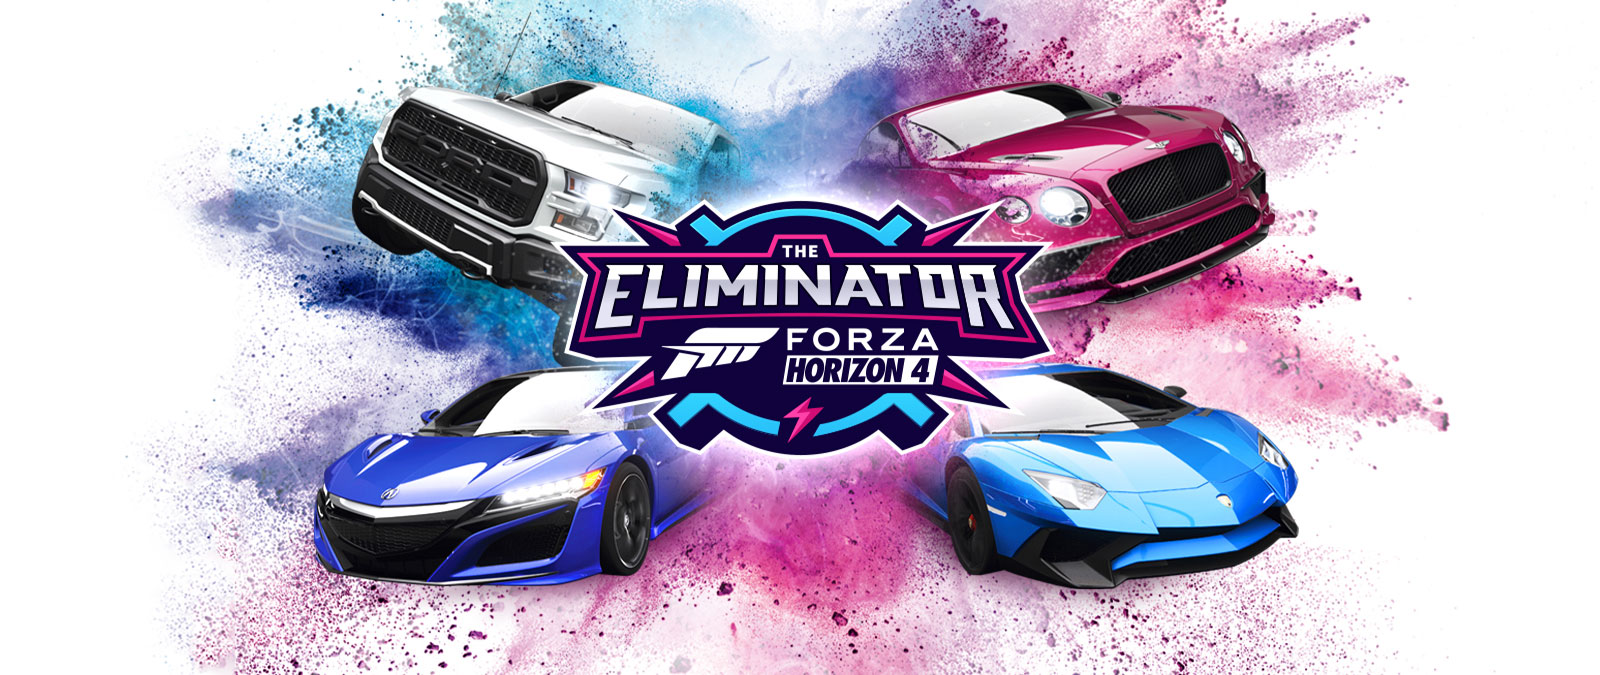 Eliminator, Forza Horizon 4 로고, 주위에 파란색과 분홍색 가루가 있는 4대의 차량